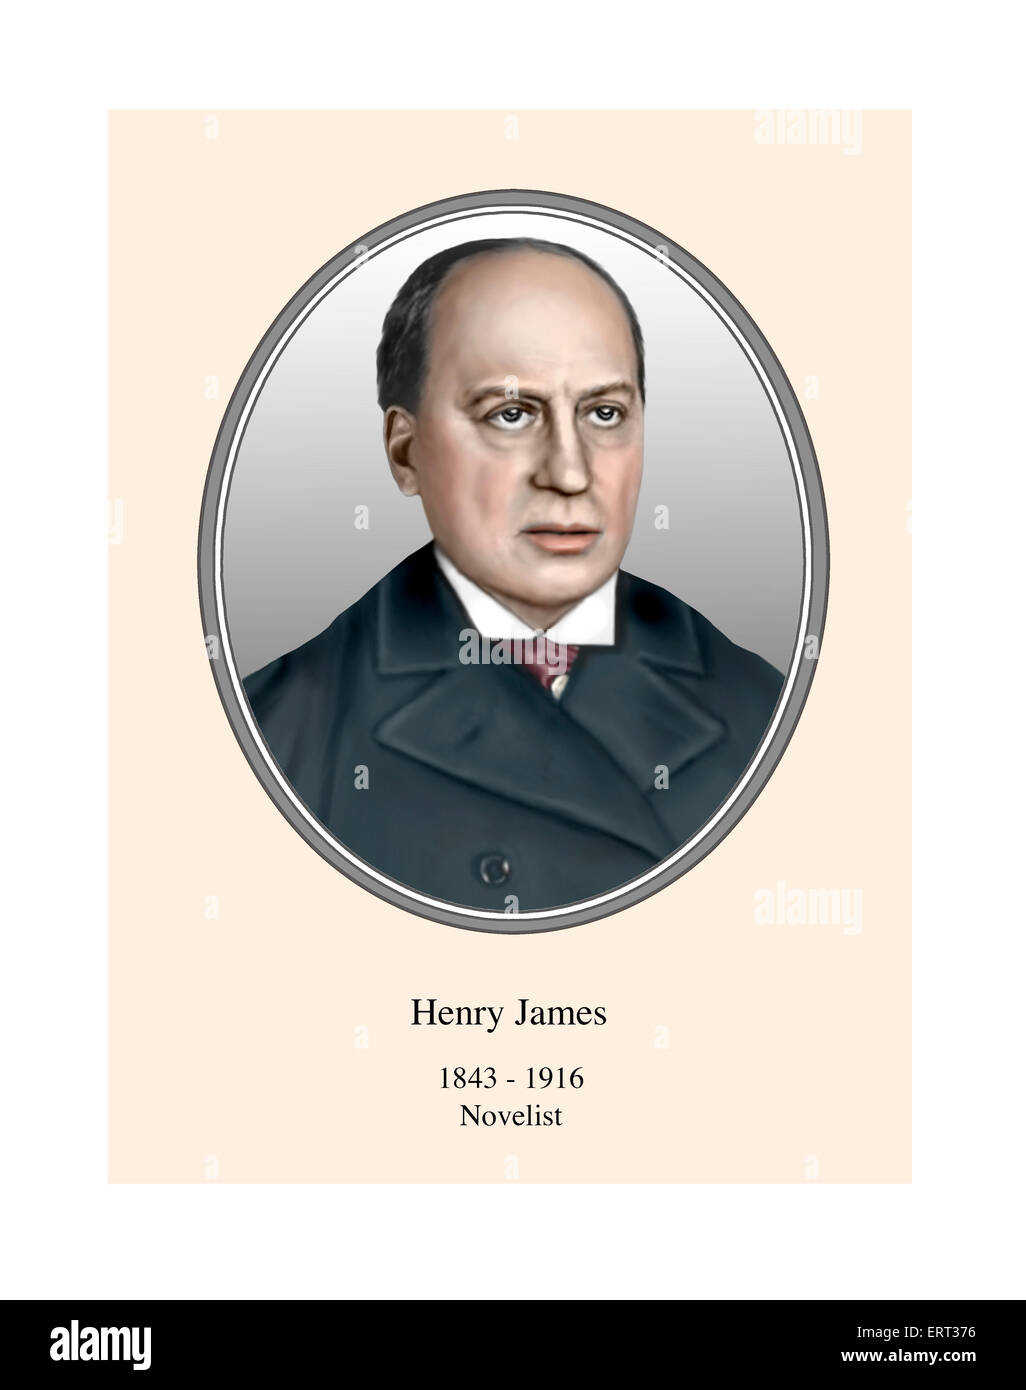 Henry James Portrait Modern Illustration Stock Photo